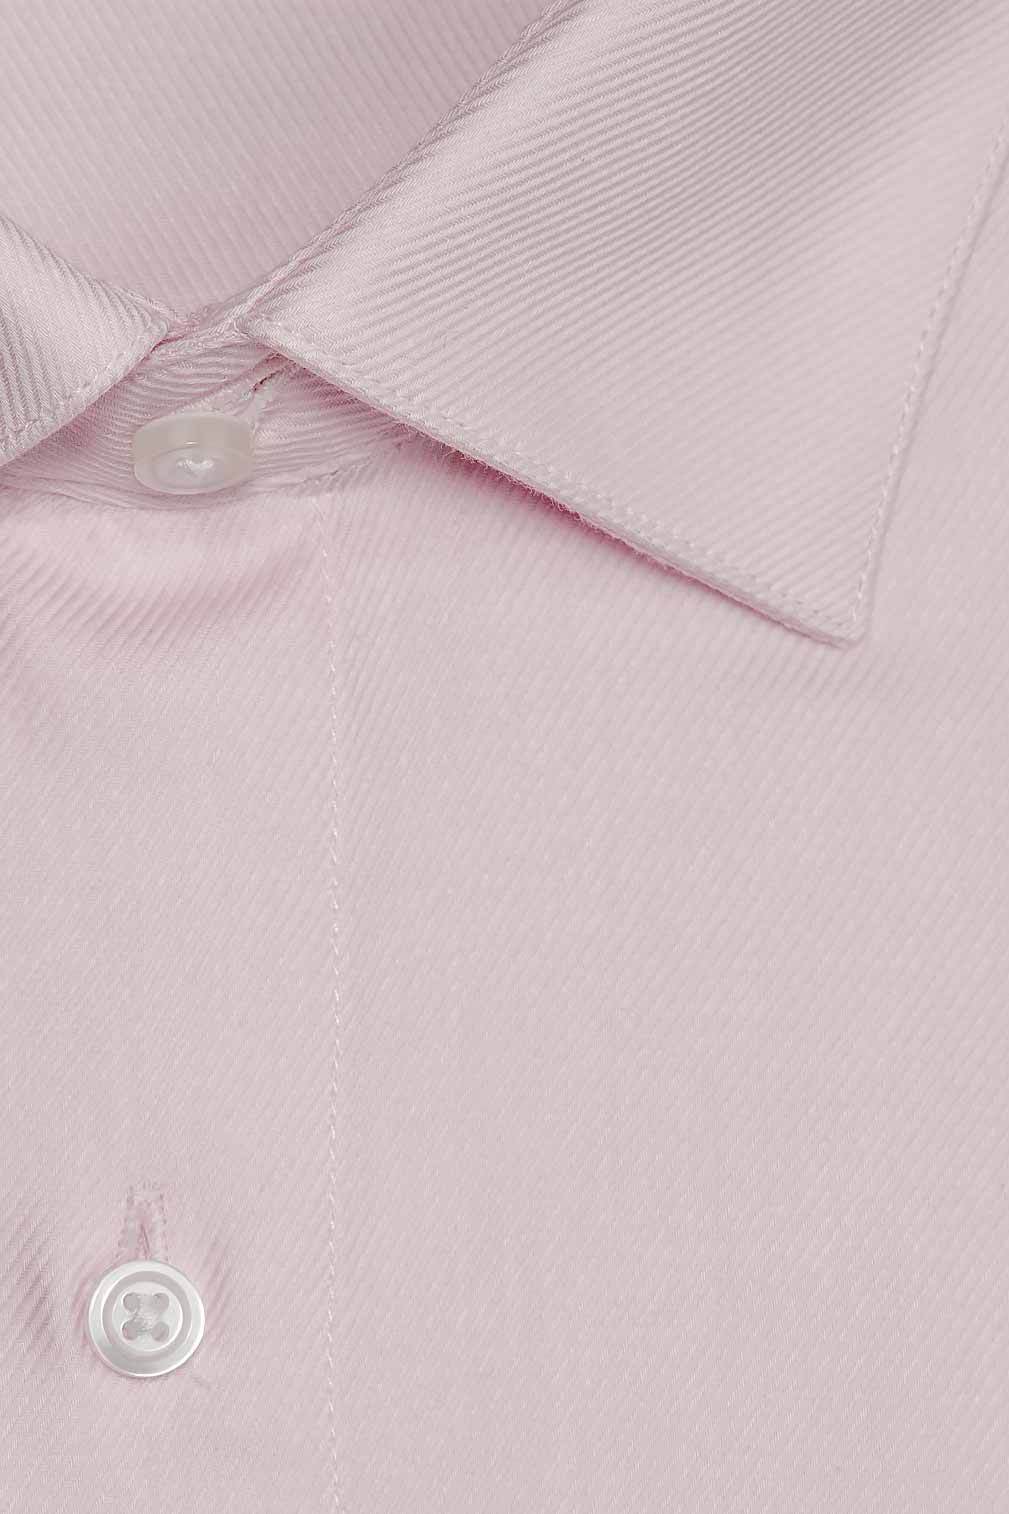 Jamison Pink Twill Spread Collar Dress Shirt - Camisa 